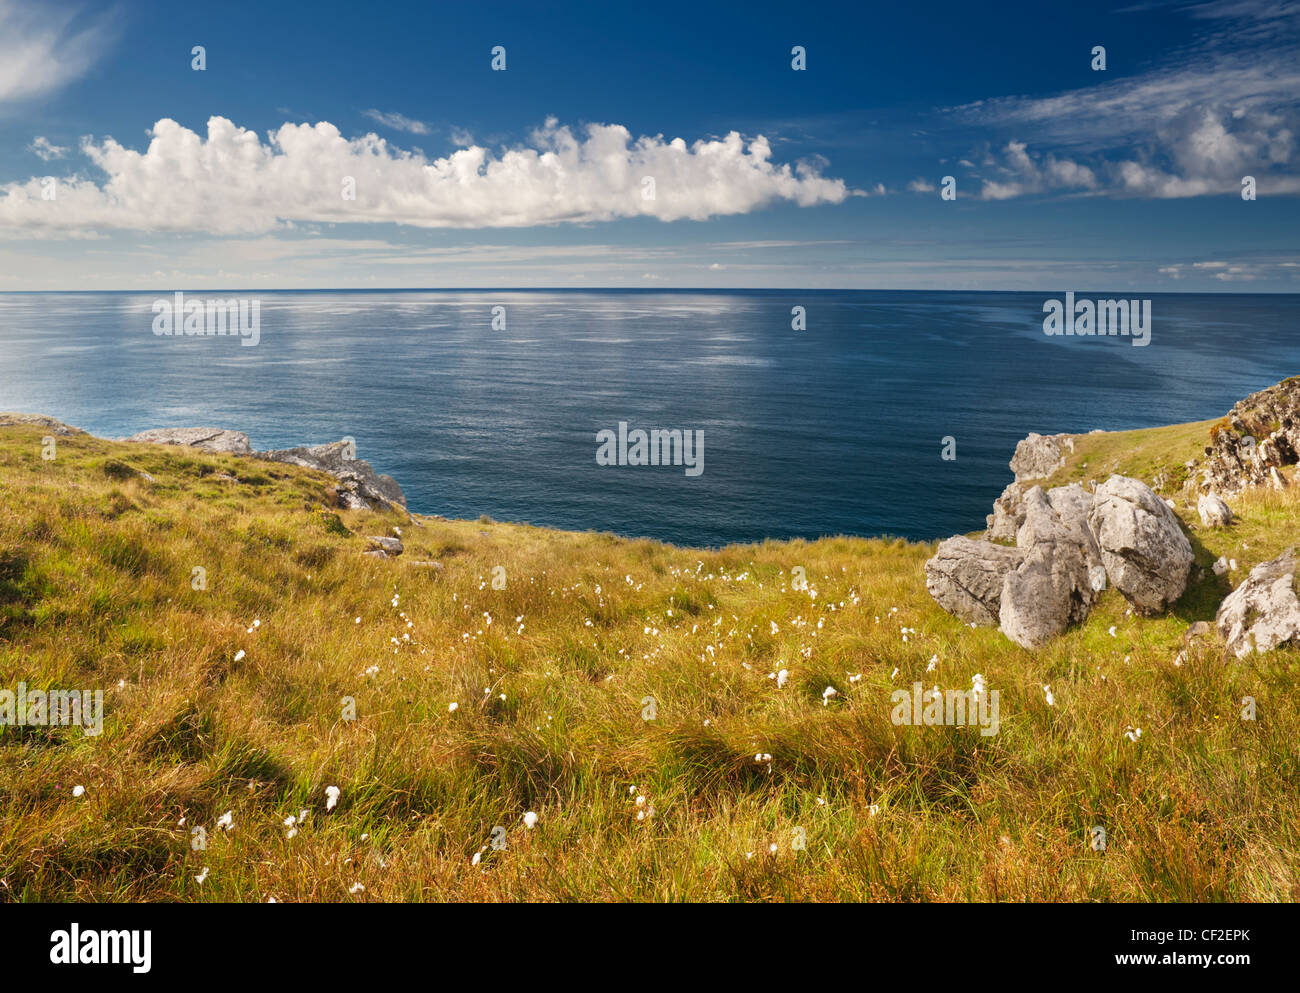 Bog cotton (cottongrass) on a rocky cliff on Bere island, Beara, County Cork, Ireland, overlooking the Atlantic Ocean Stock Photo